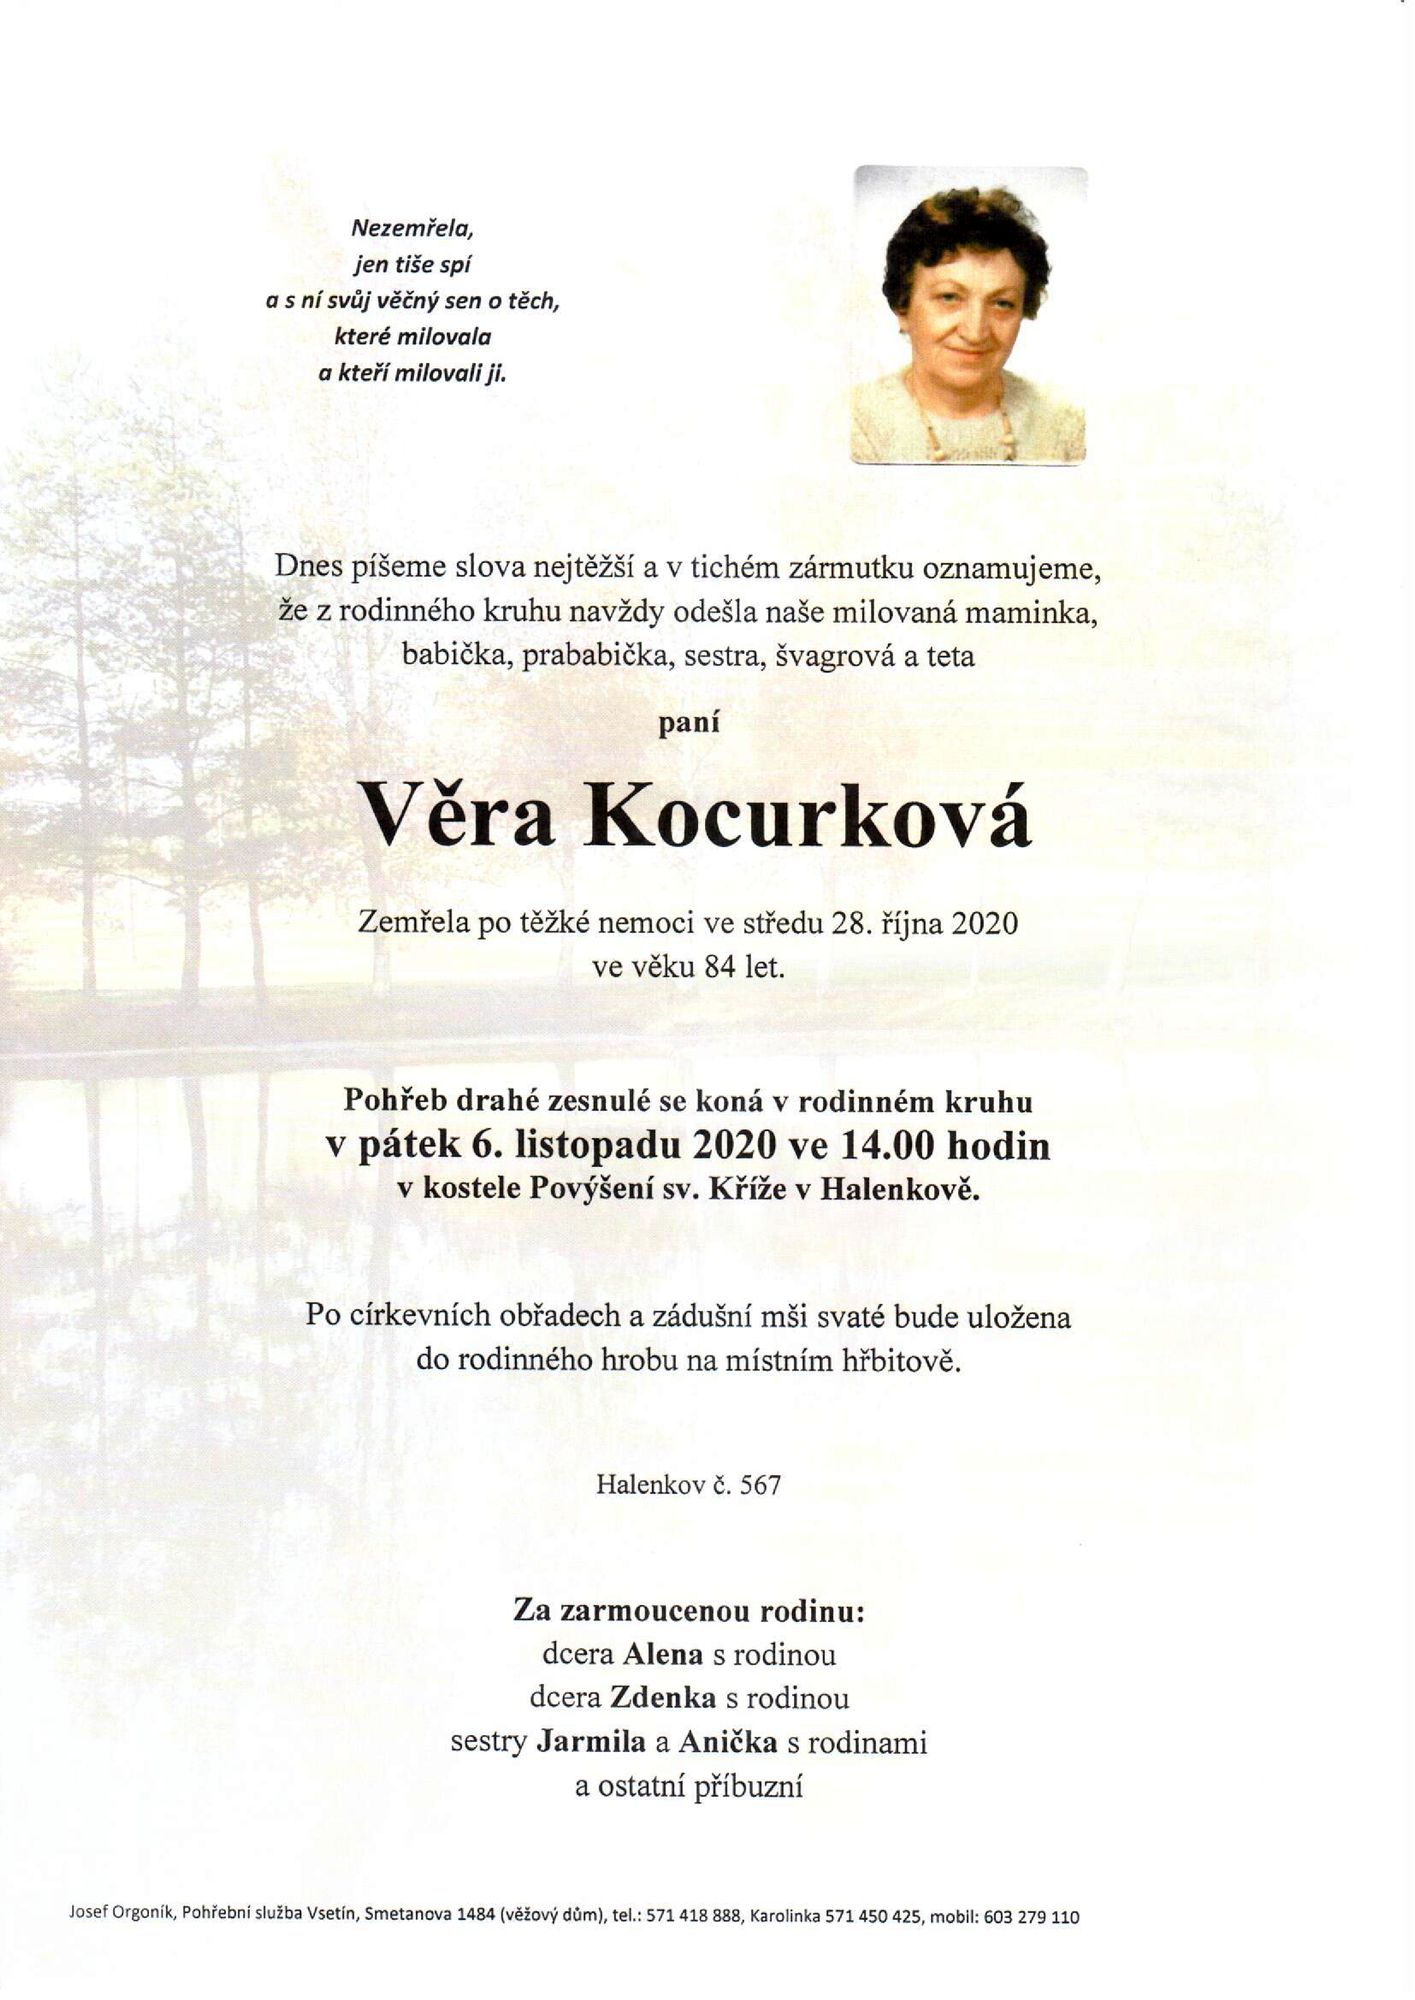 Věra Kocurková